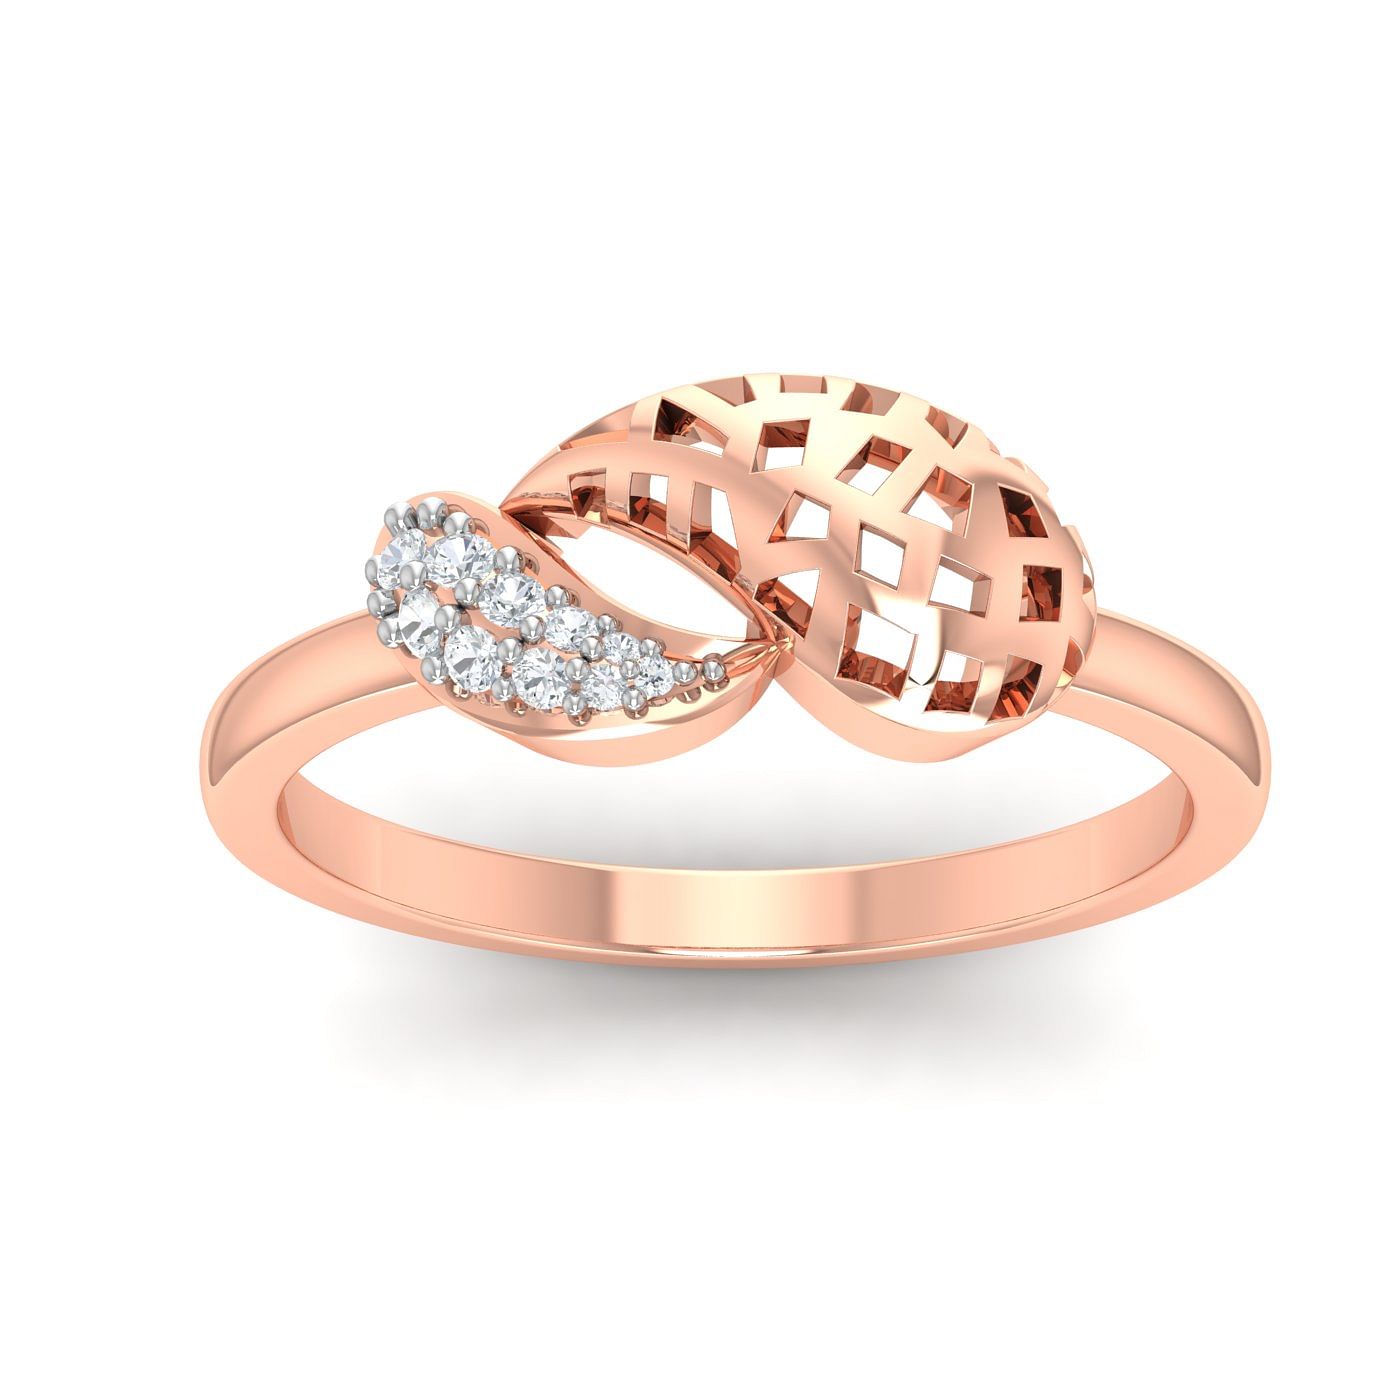 Aadhya Diamond Ring For Women | Modern Style Design Diamond Ring For Women In Rose Gold